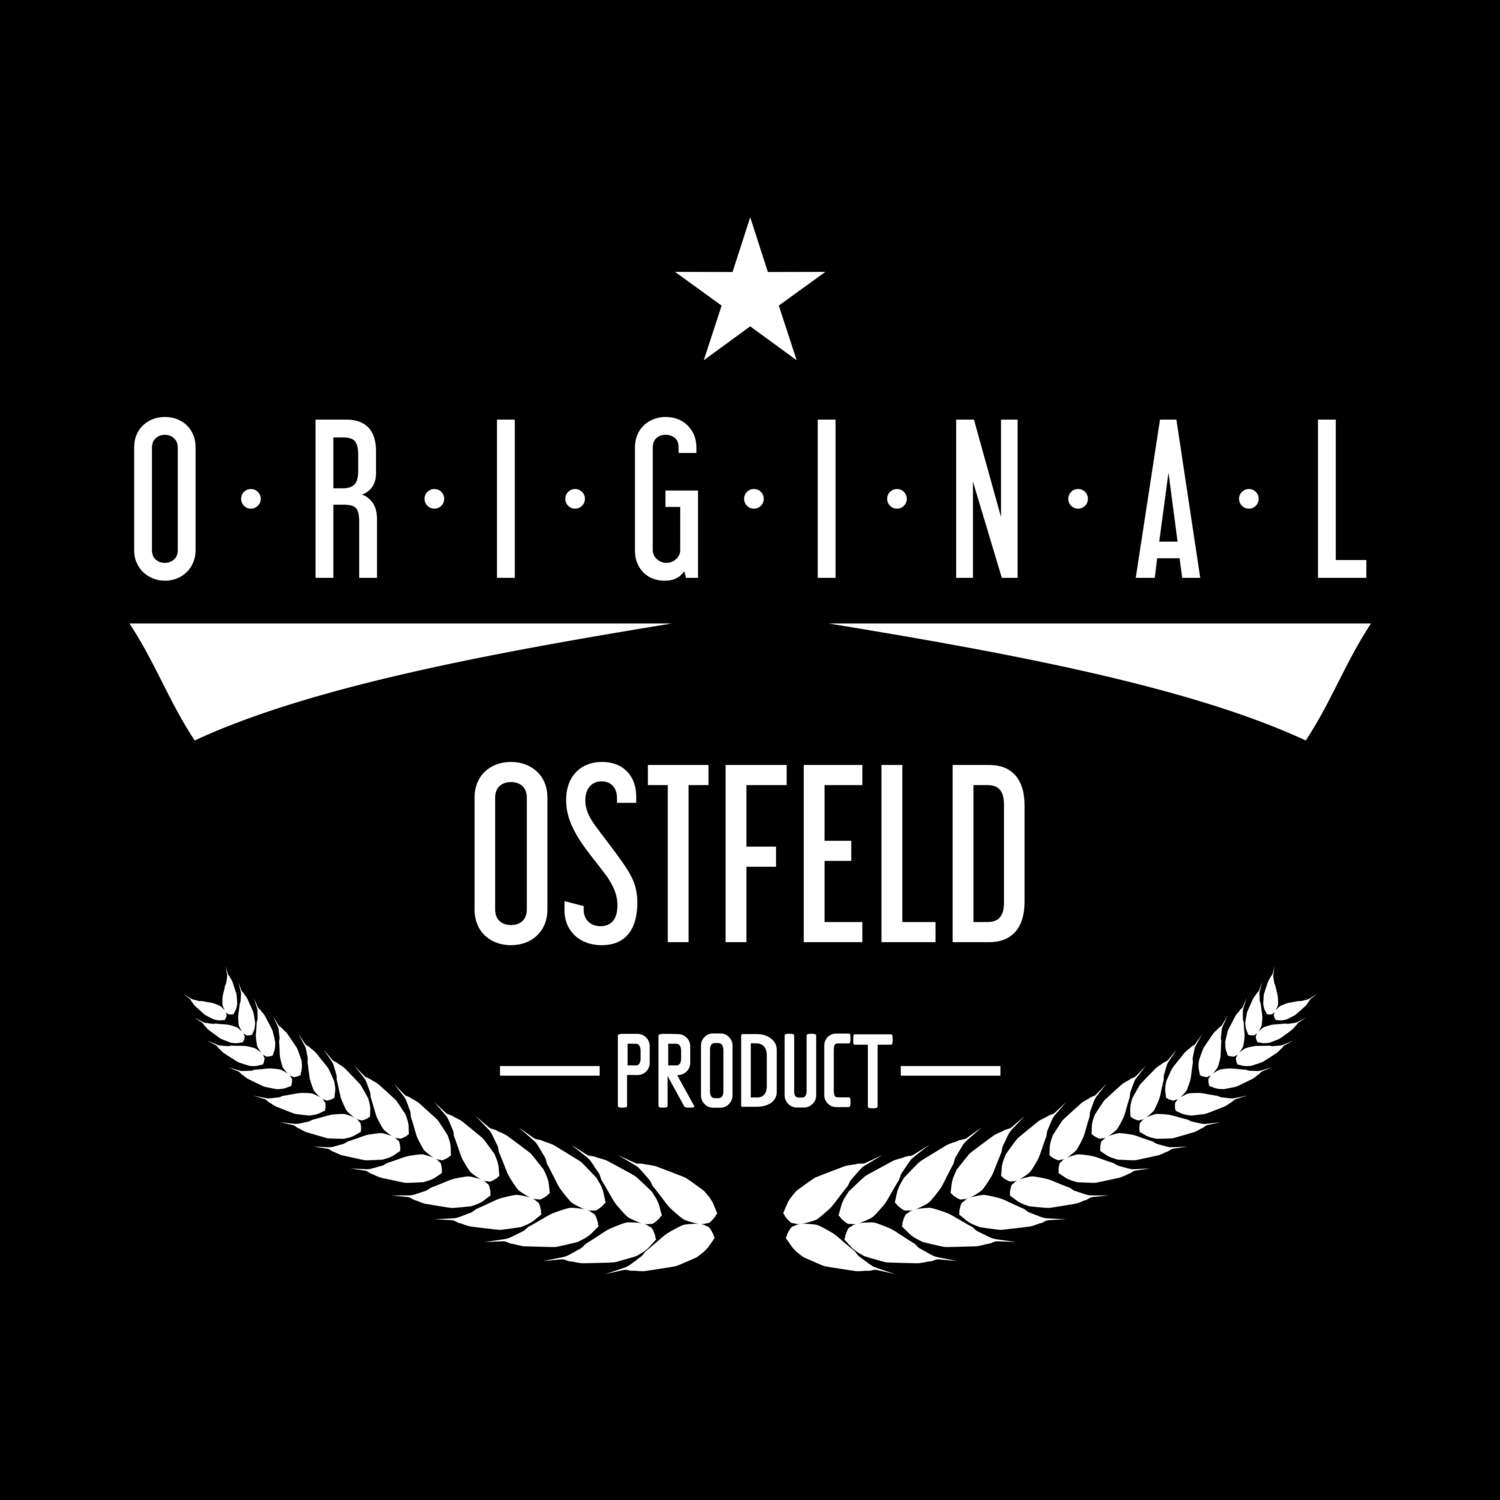 Ostfeld T-Shirt »Original Product«